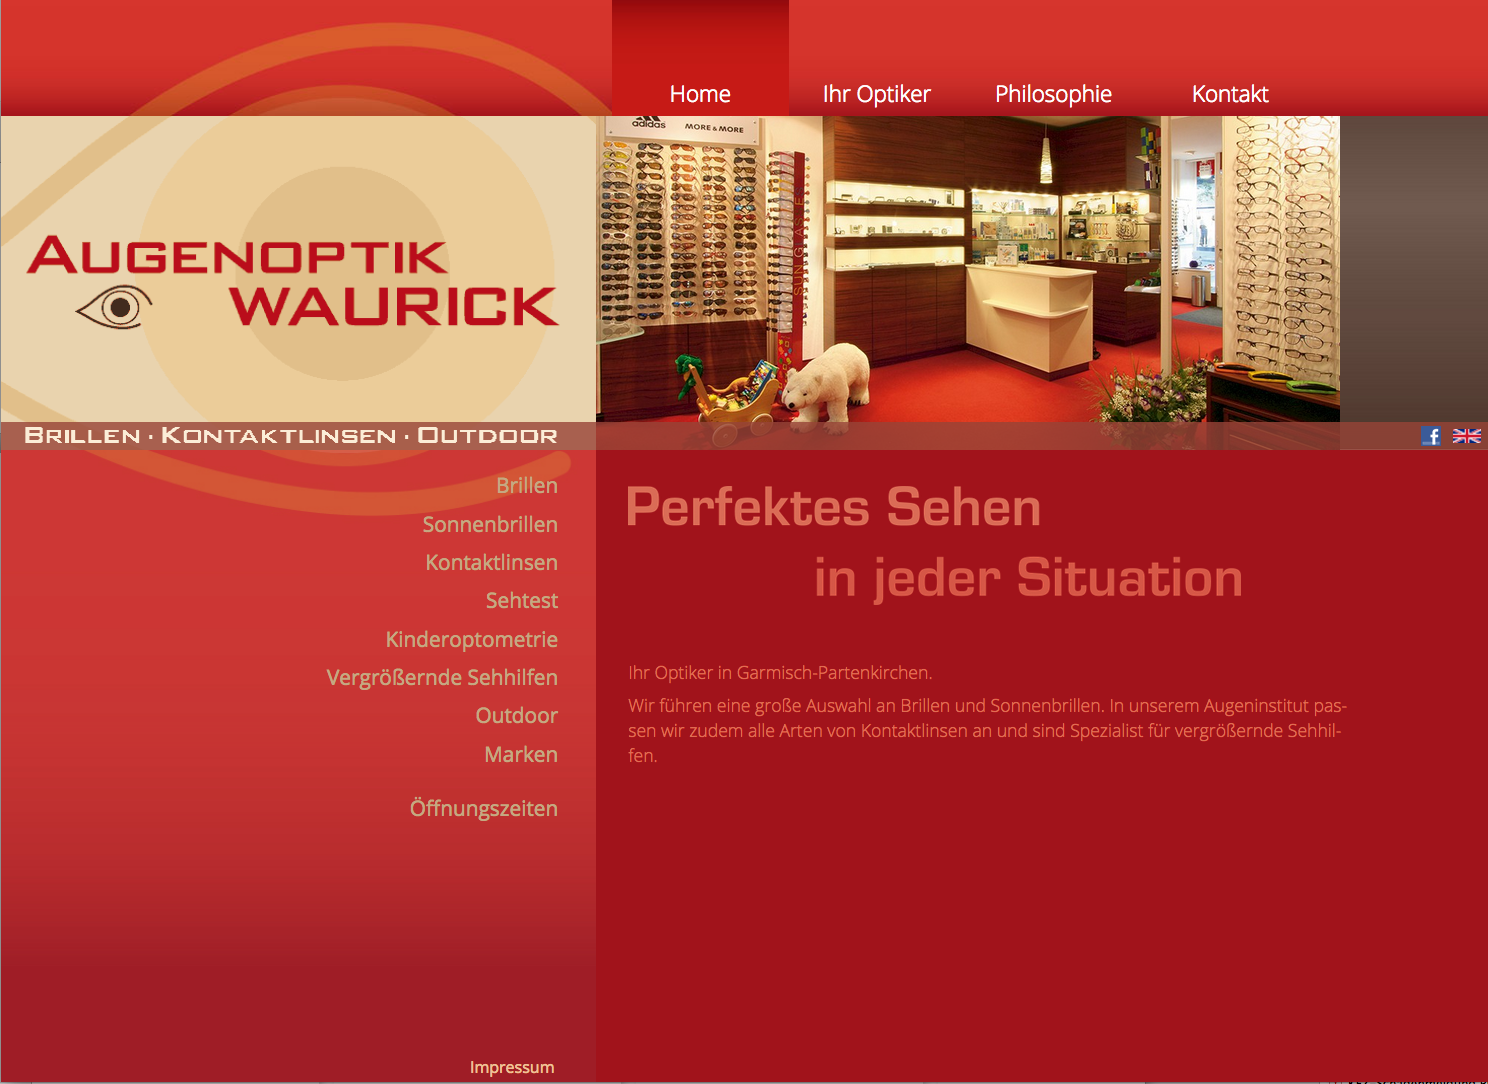 Augeninstitut Waurick